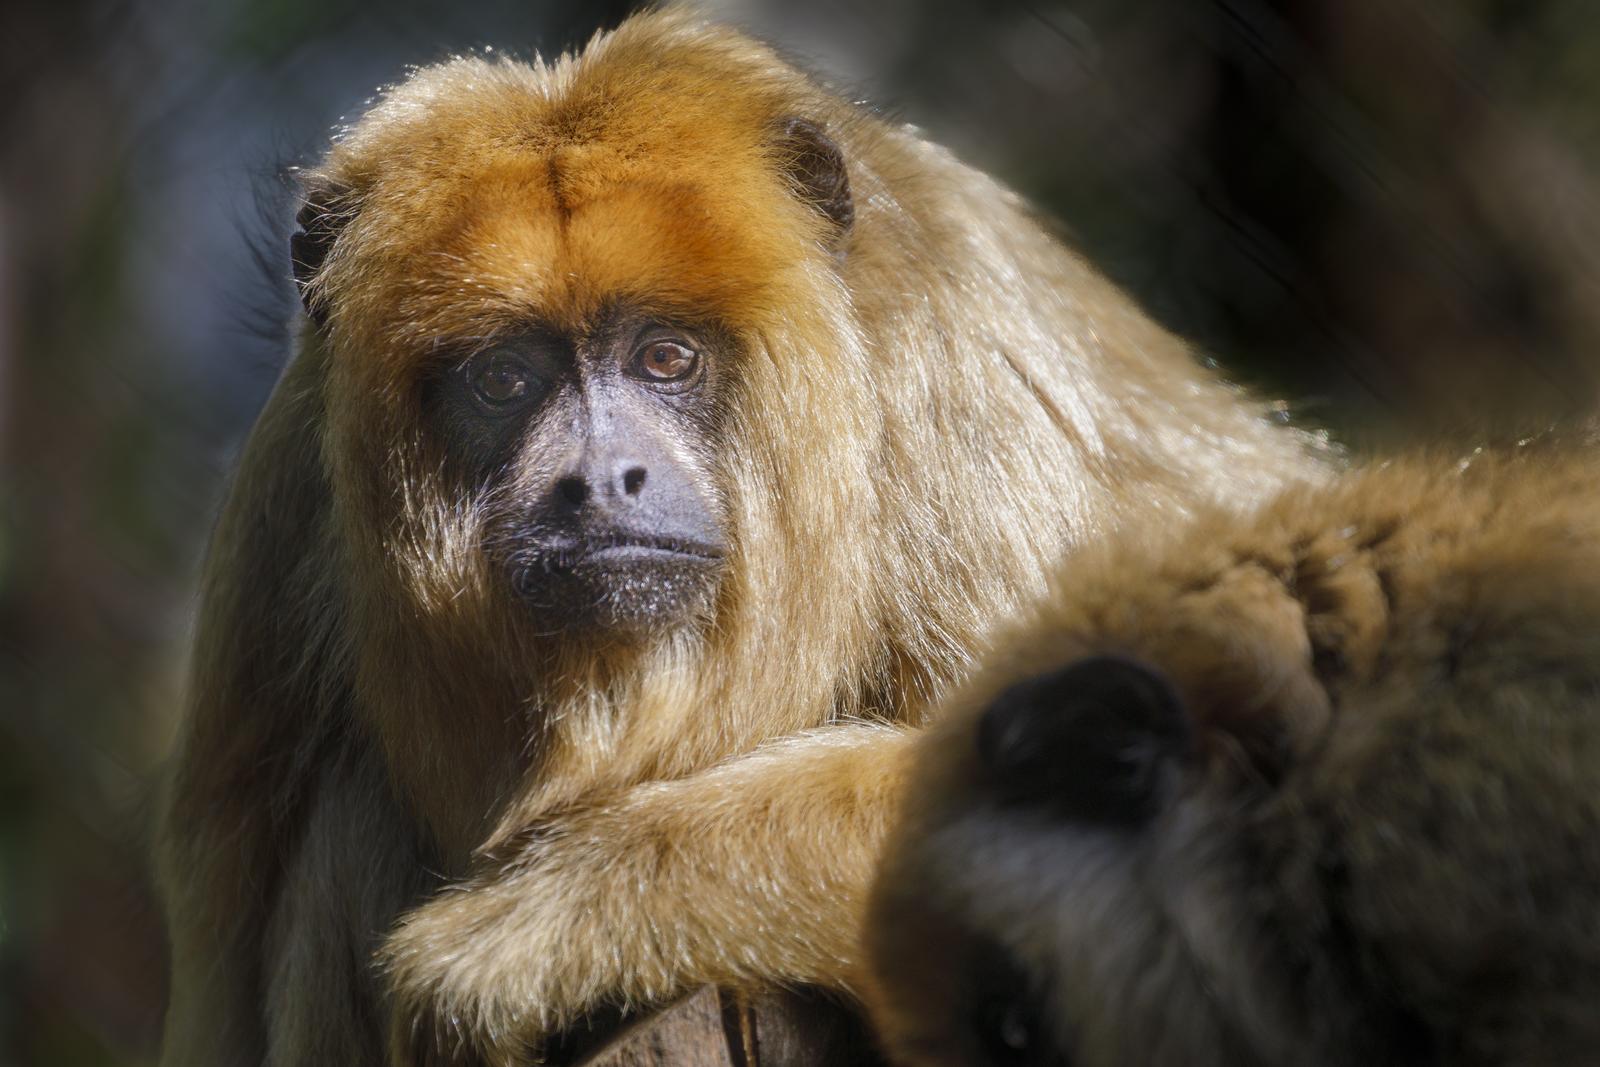 Capuchin Monkey, sit down looking with sad face, Pantanal, Brazil